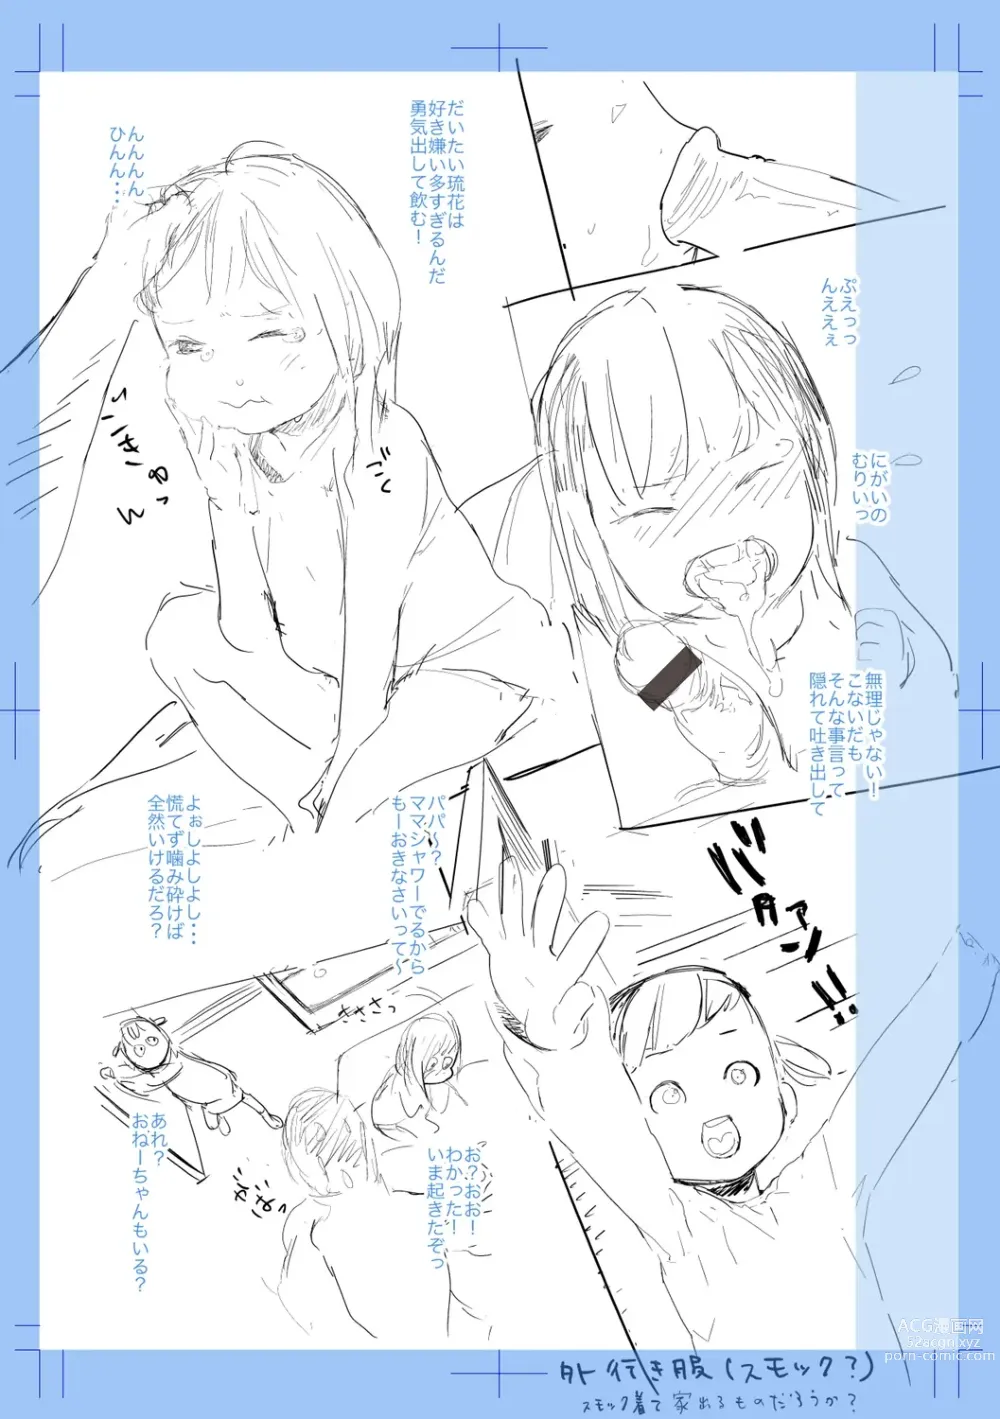 Page 231 of manga Hitoketakko Adorable